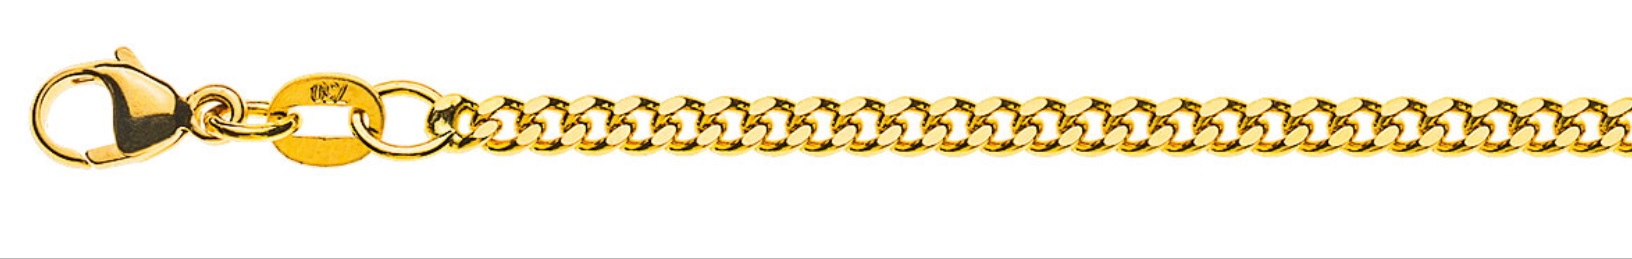 AURONOS Prestige Necklace yellow gold 18K curb chain polished 50cm 2.6mm